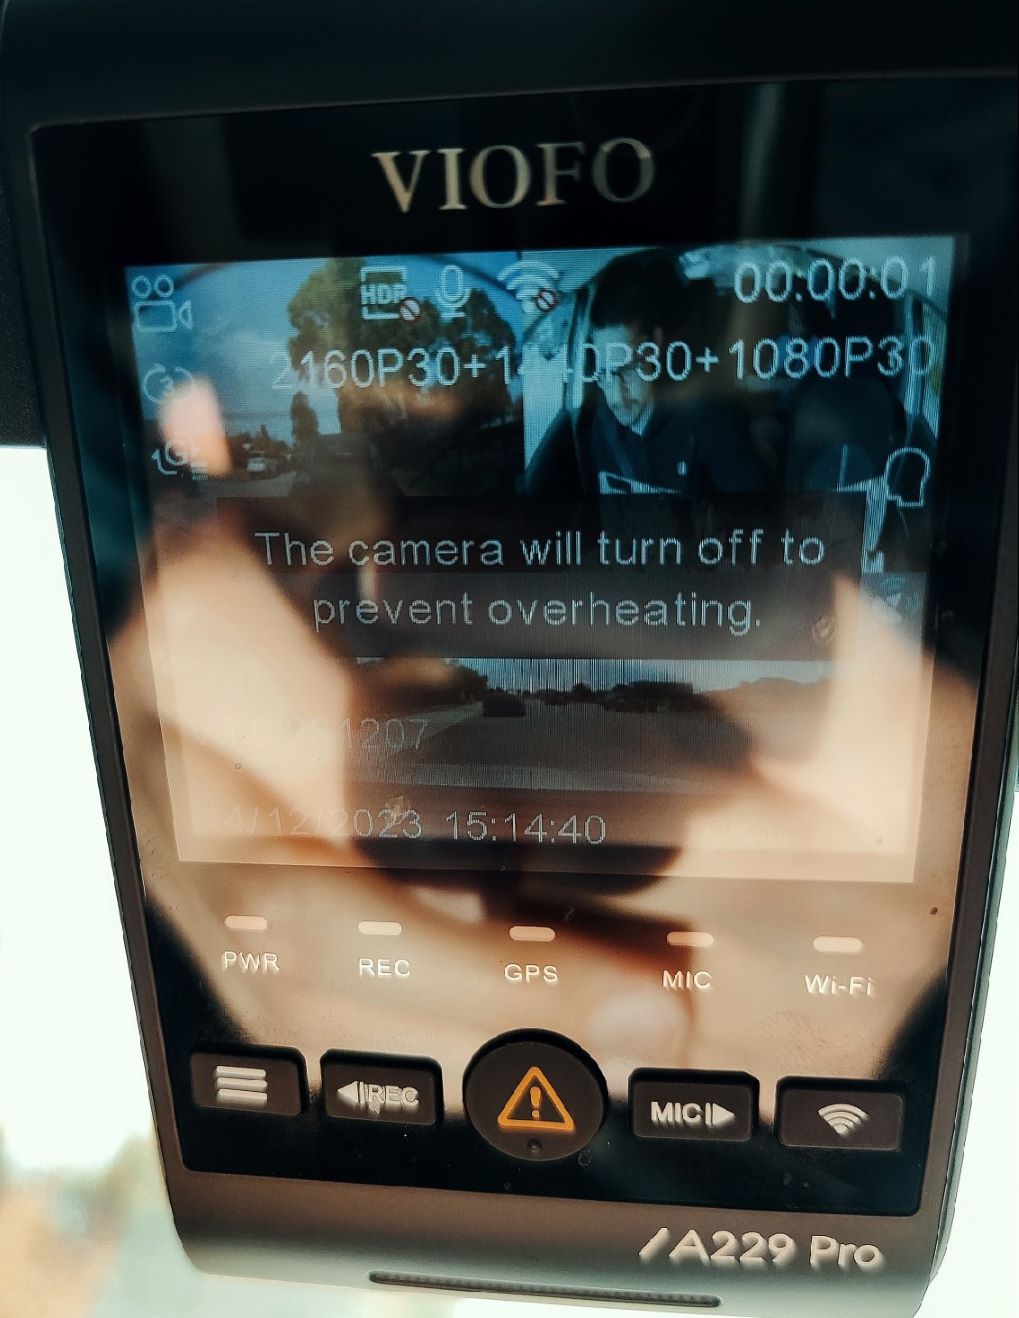 VIOFO A229 Pro - Turn Off